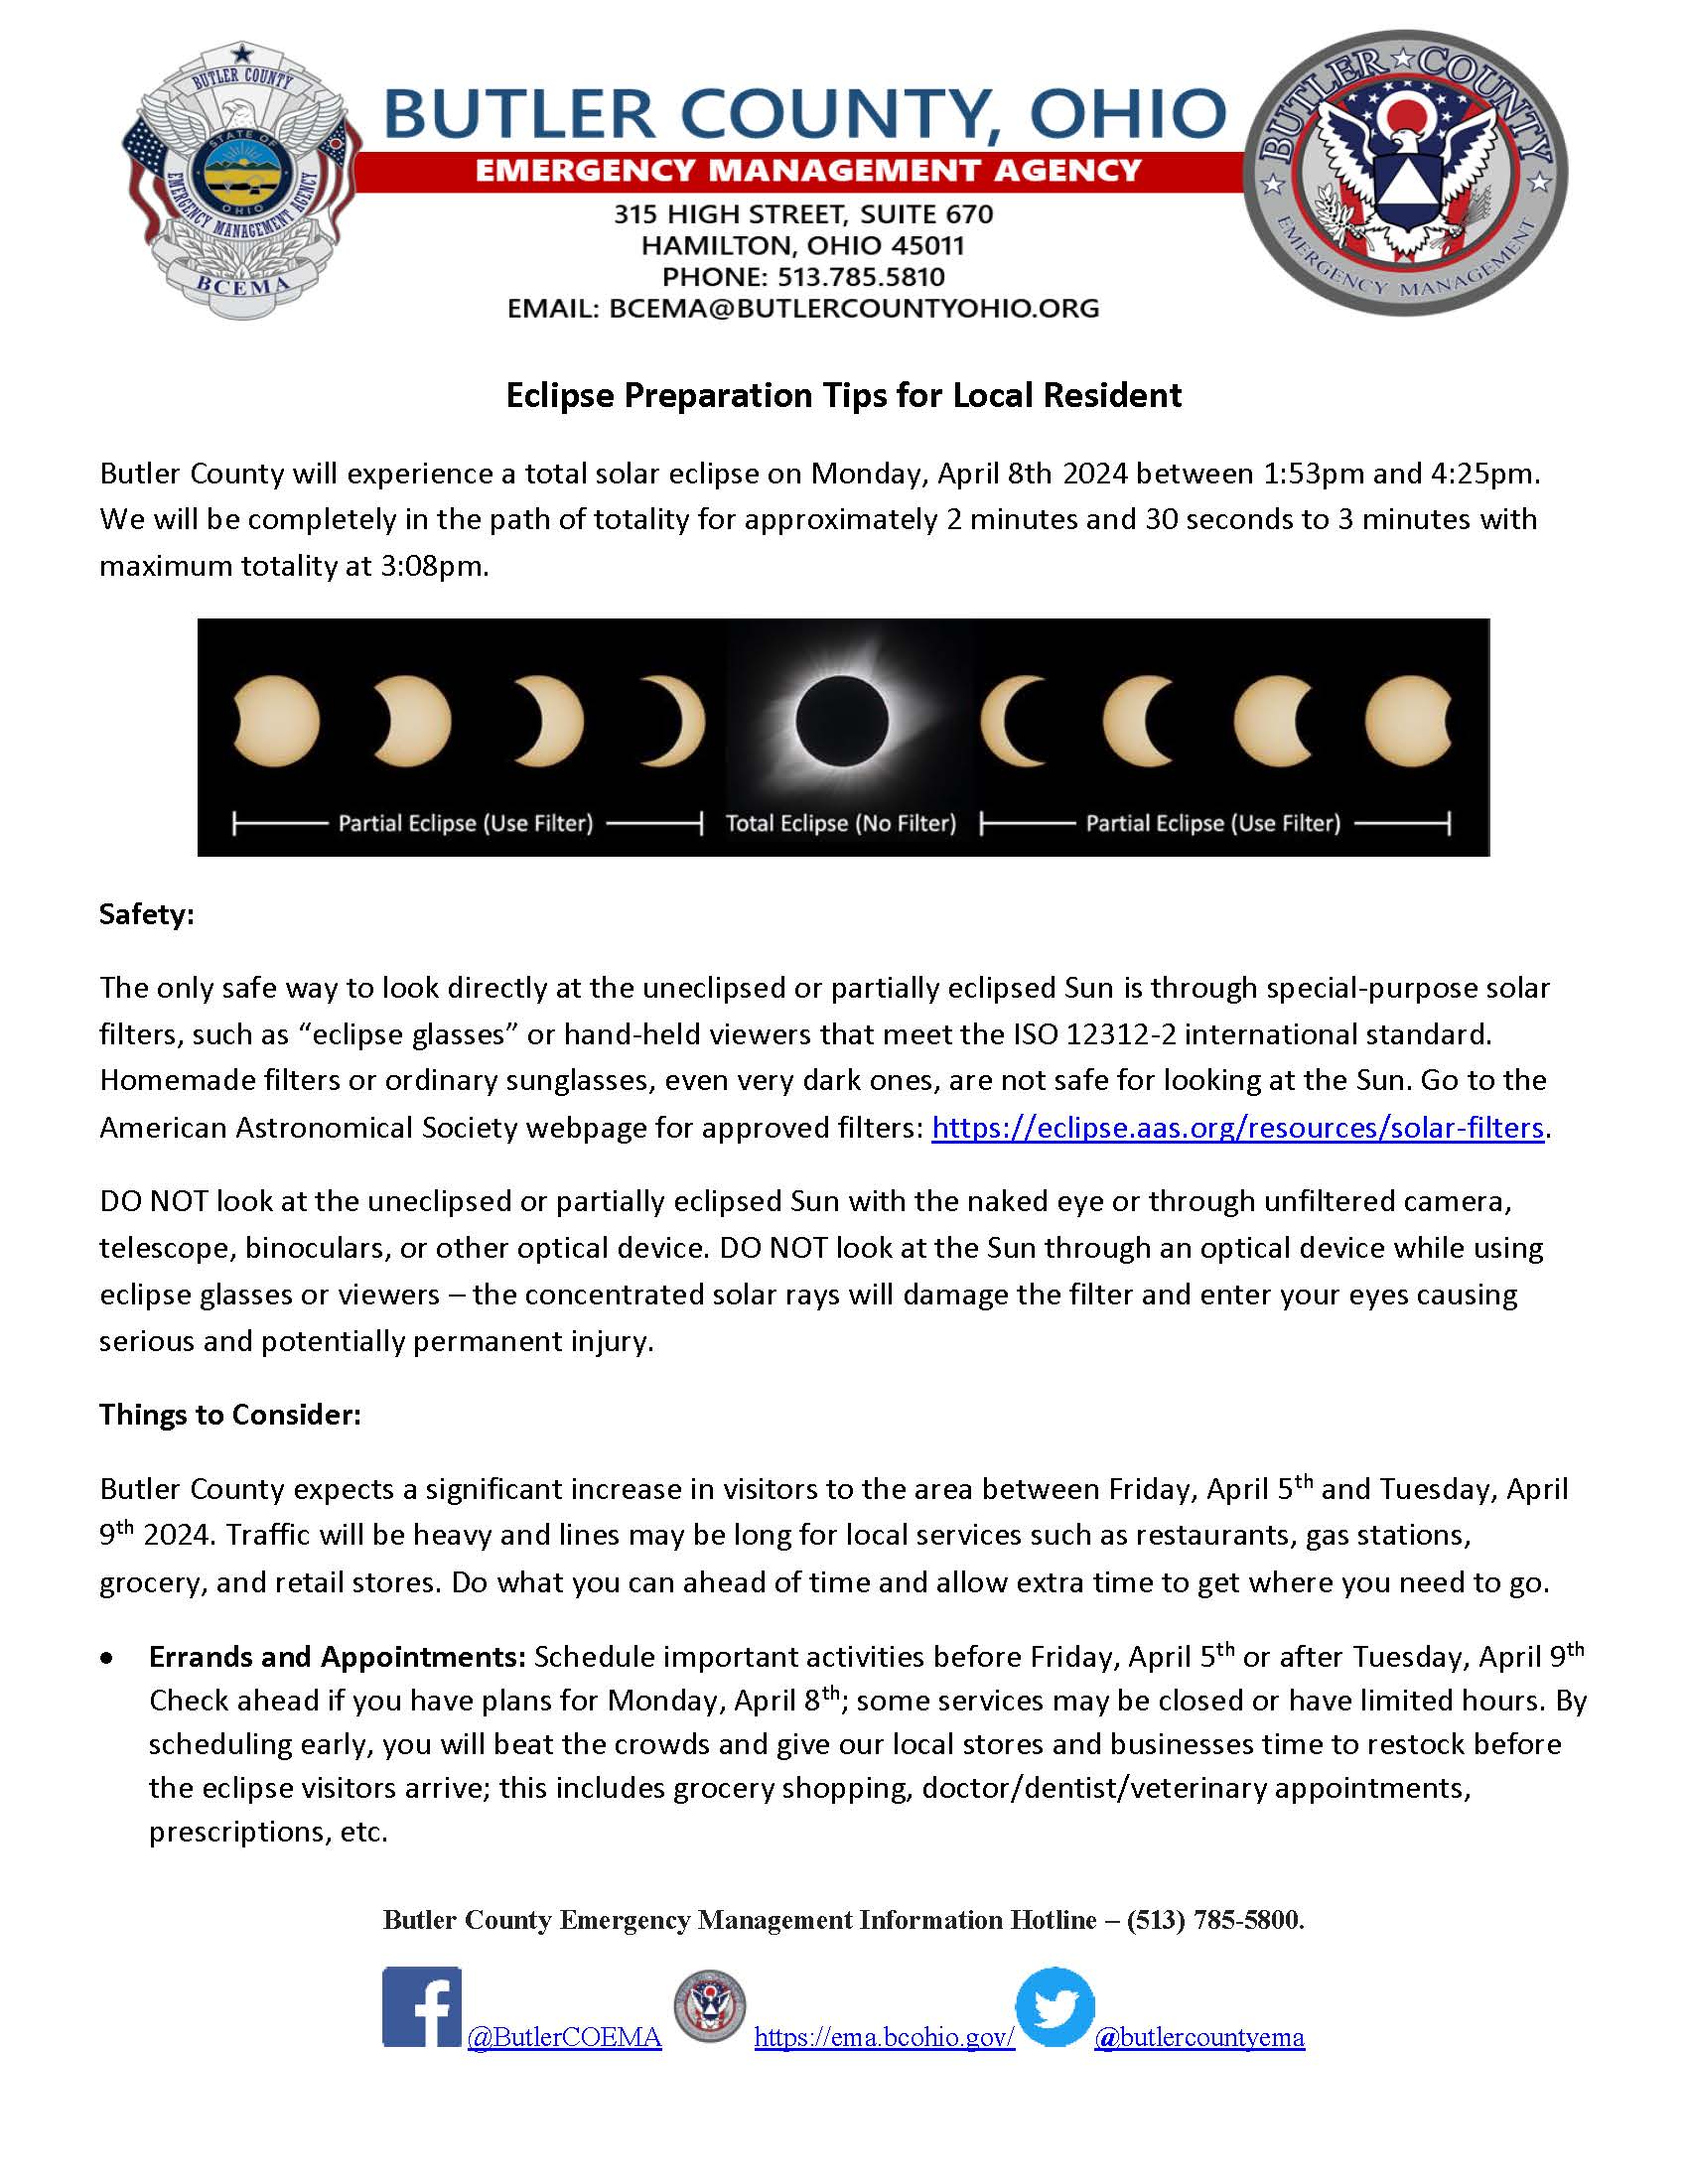 butler County Eclipse preparation tips 